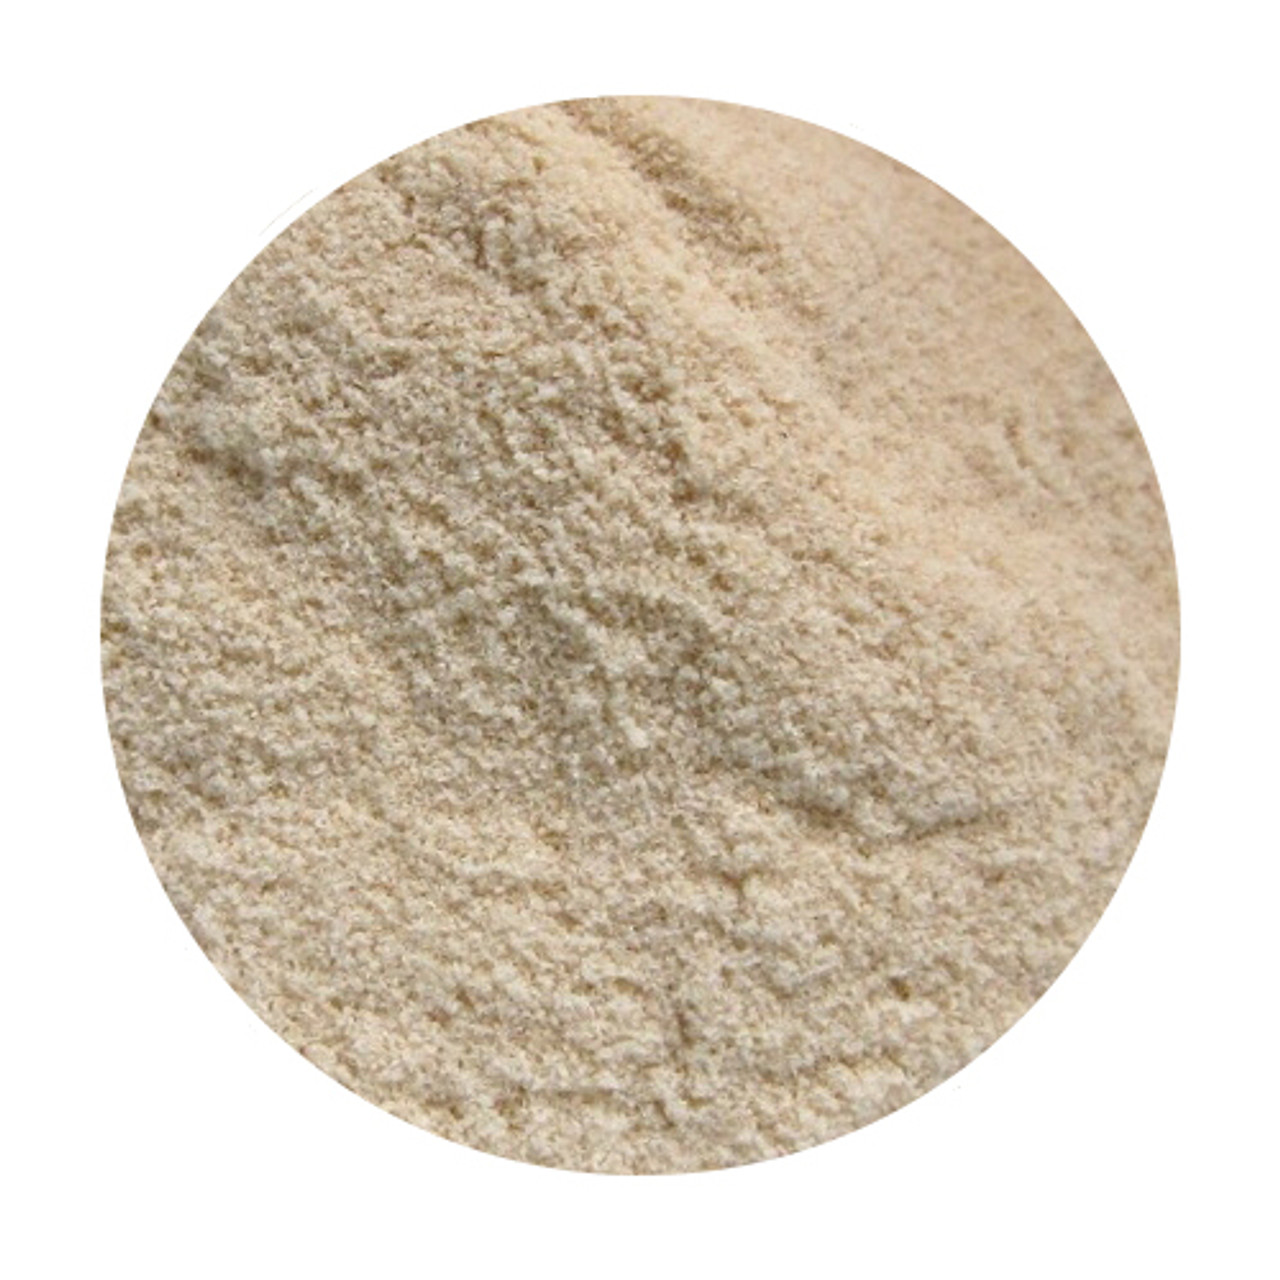 Sodium Alginate Powder, 25 kg at Rs 330/kg in Pune